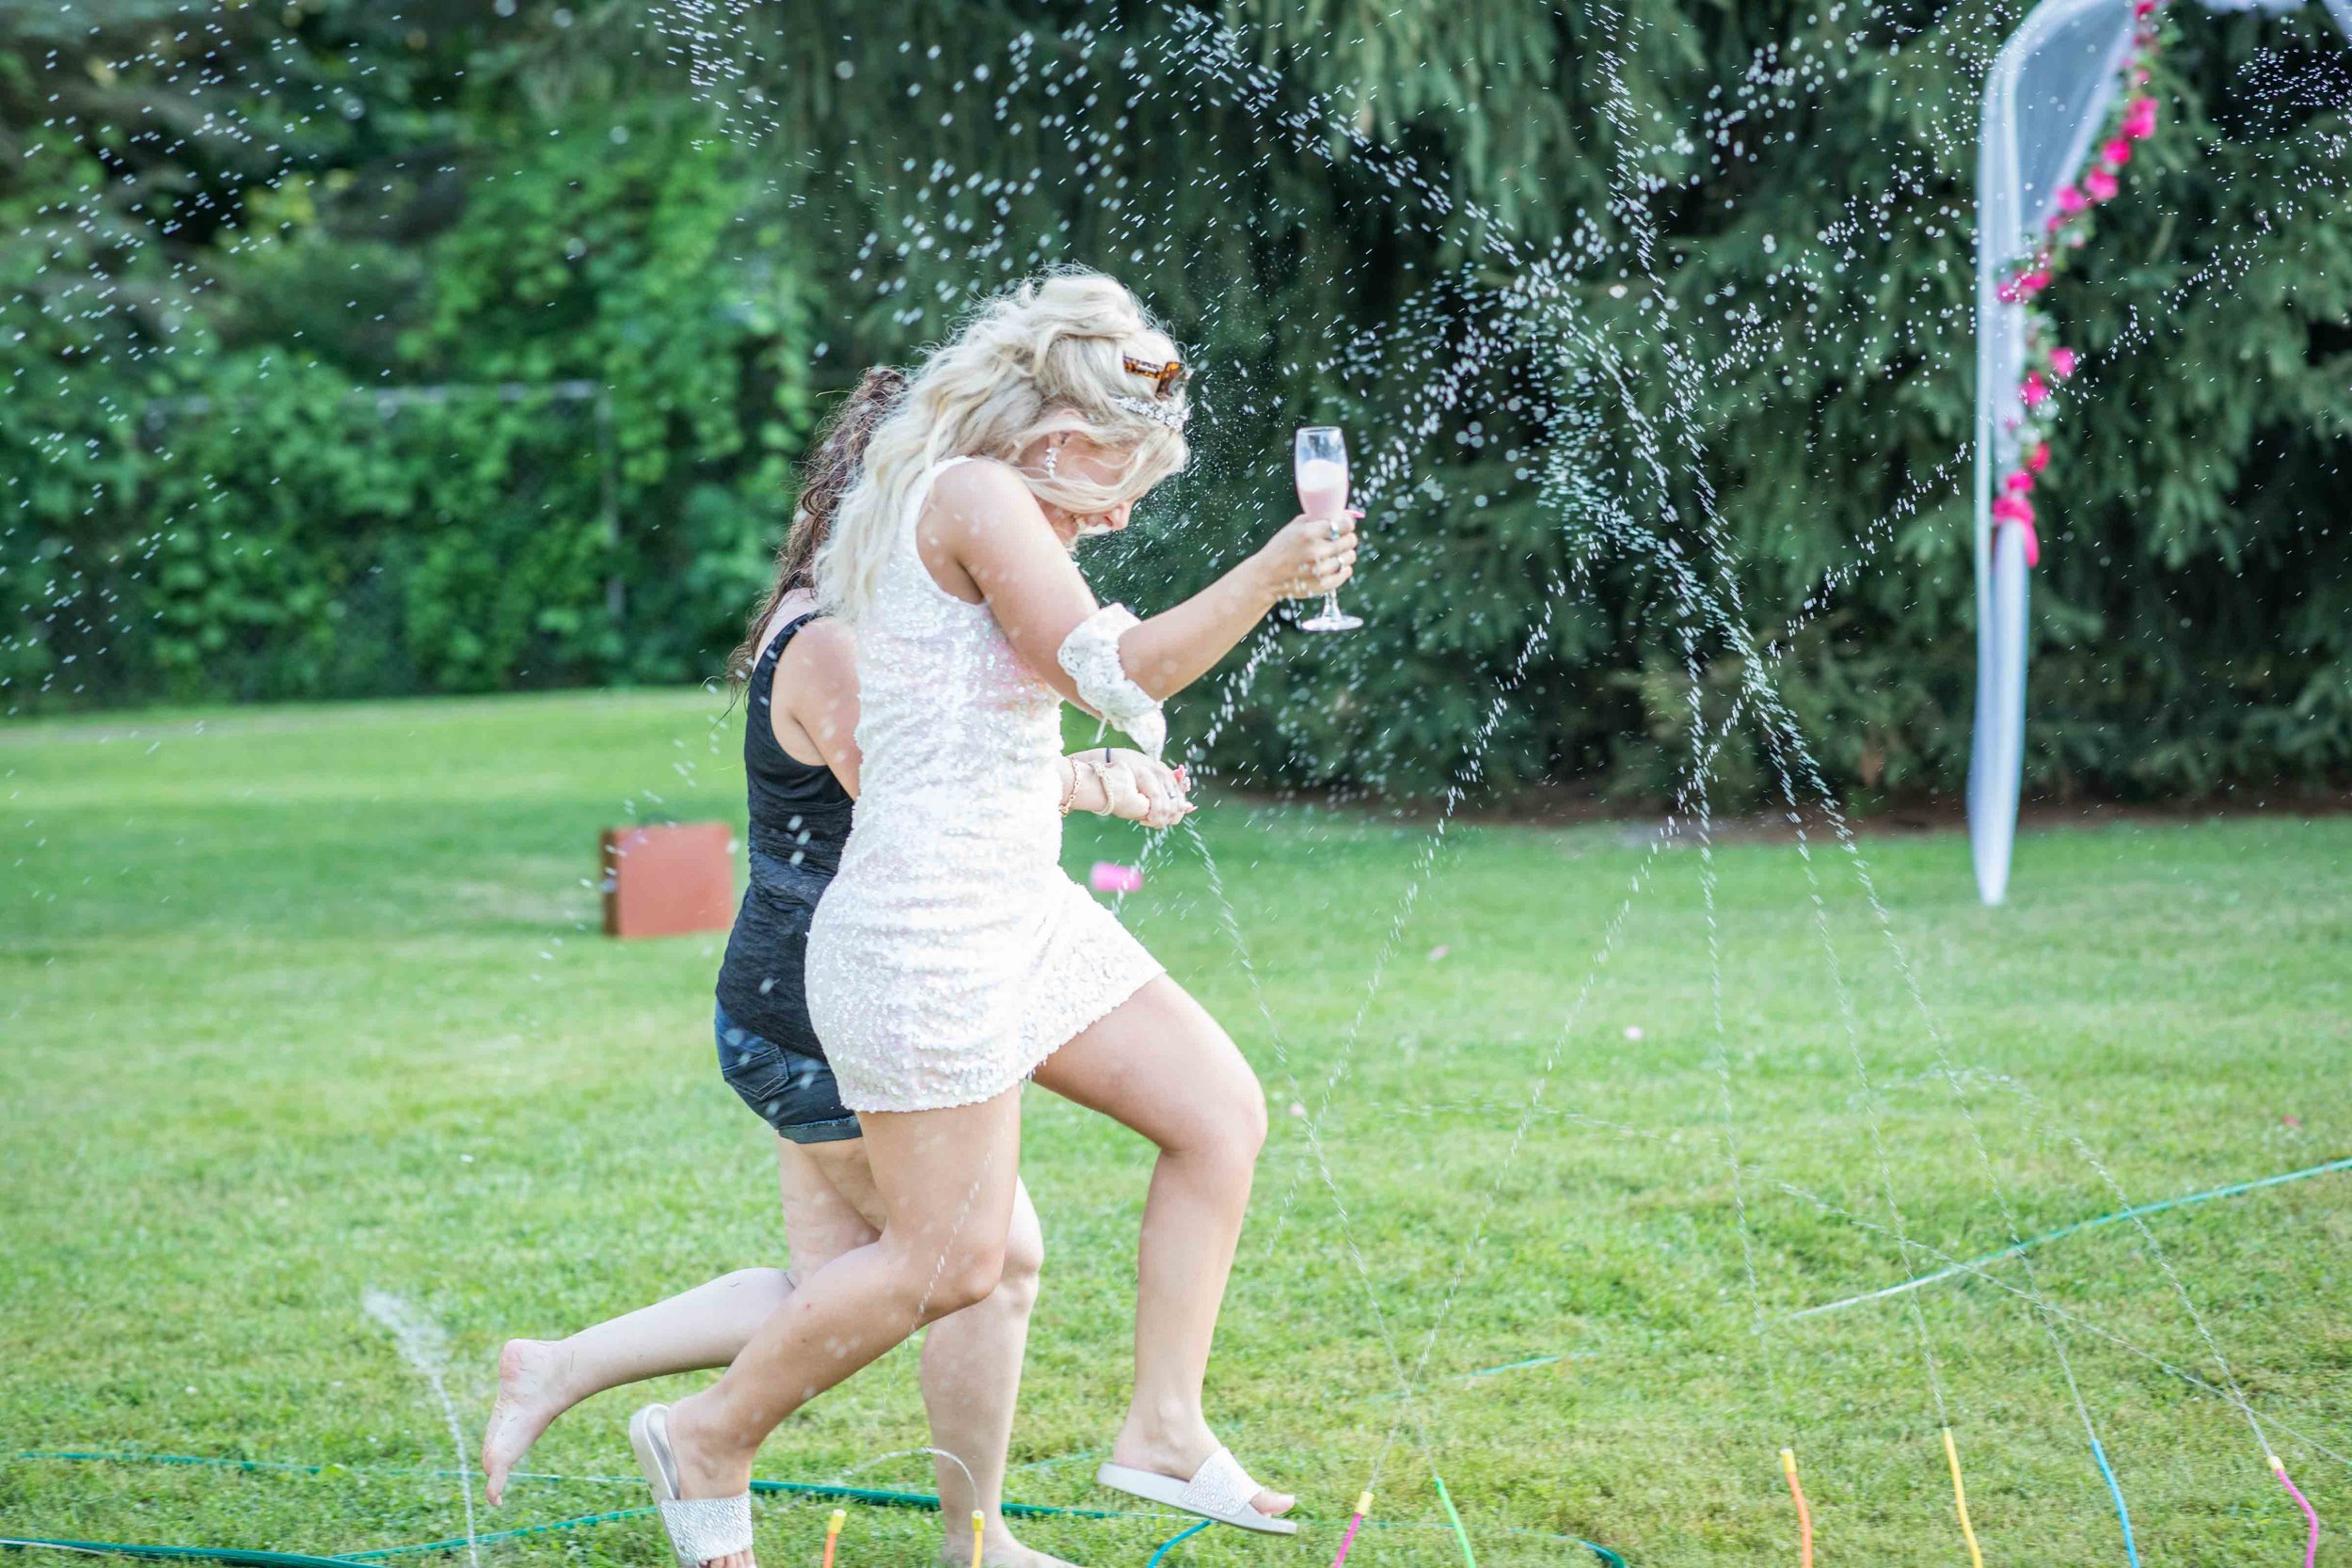  Bride running through a sprinkler system 